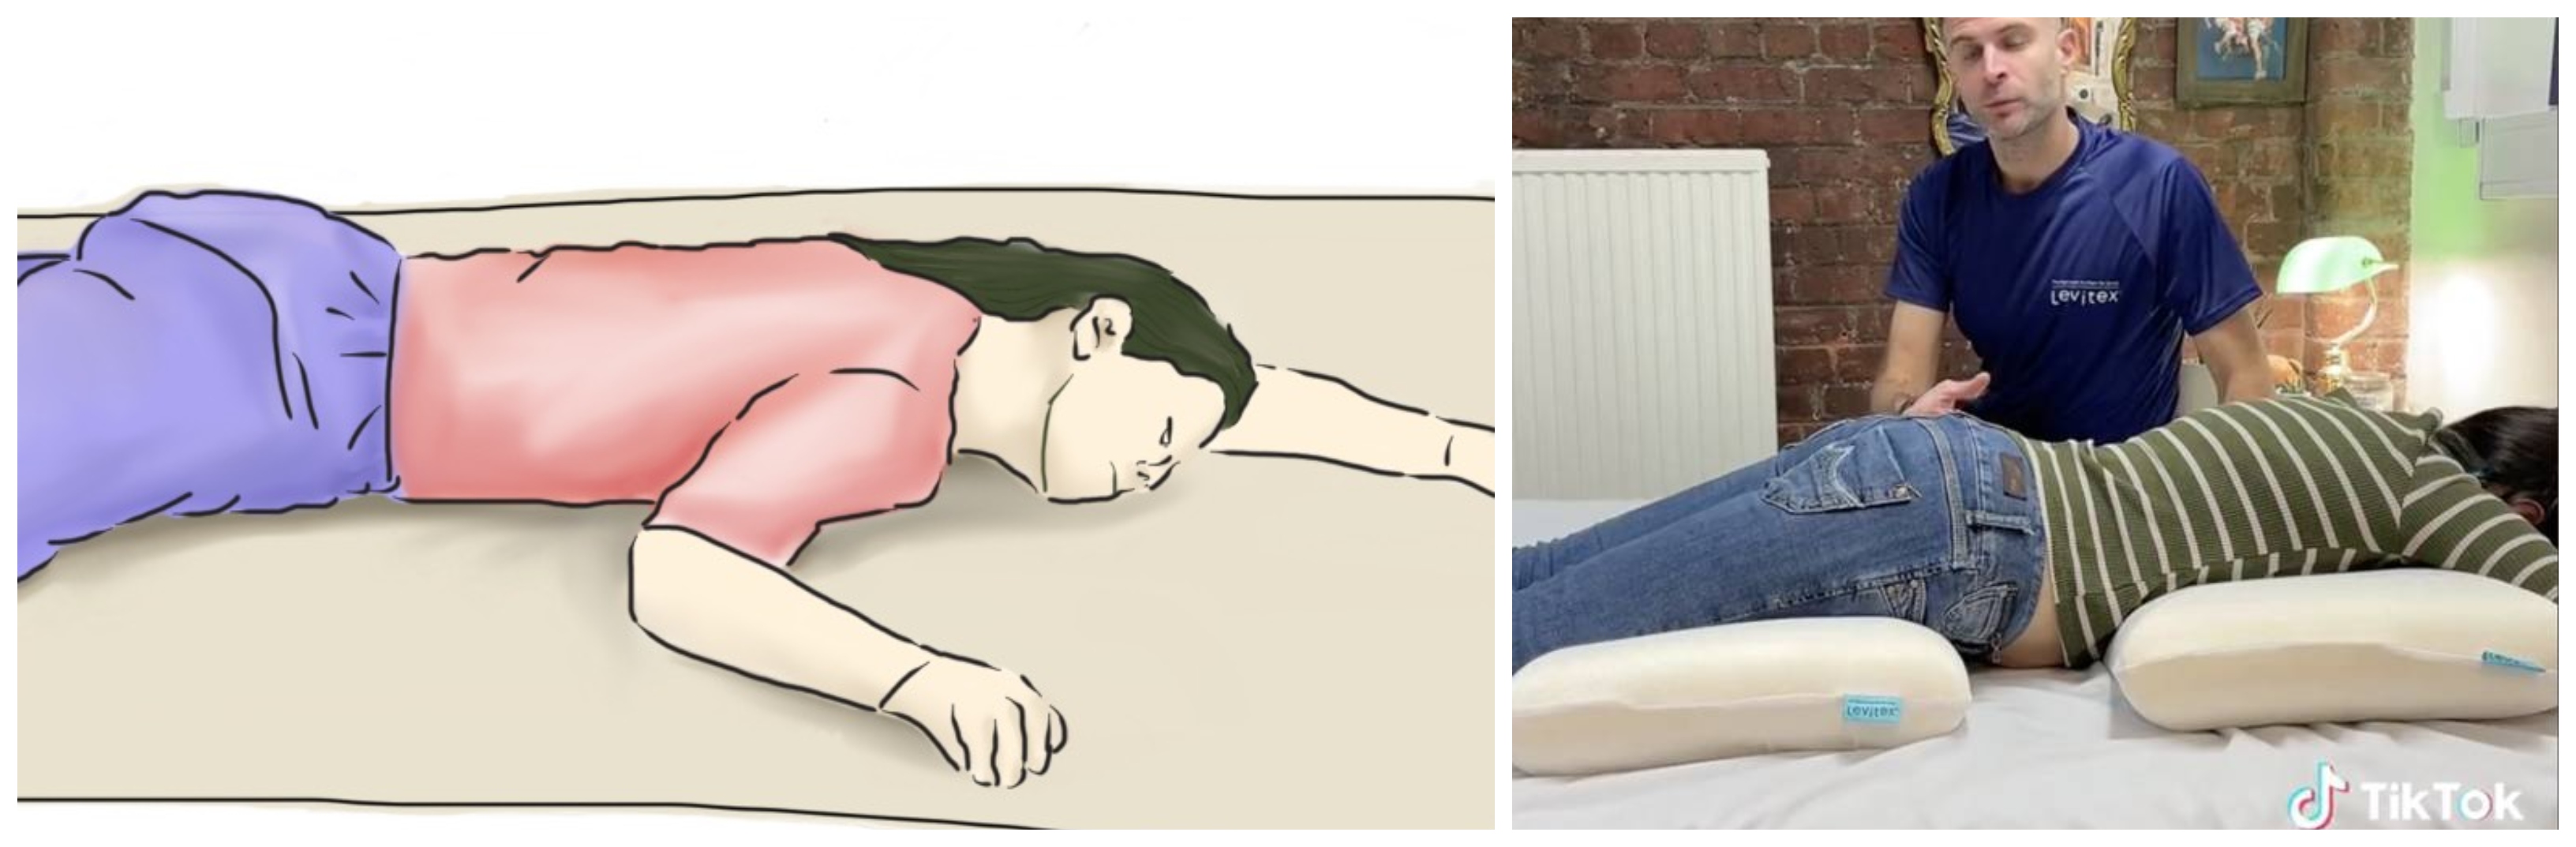 ‘Car Crash’ sleeping position vs proning postions collage